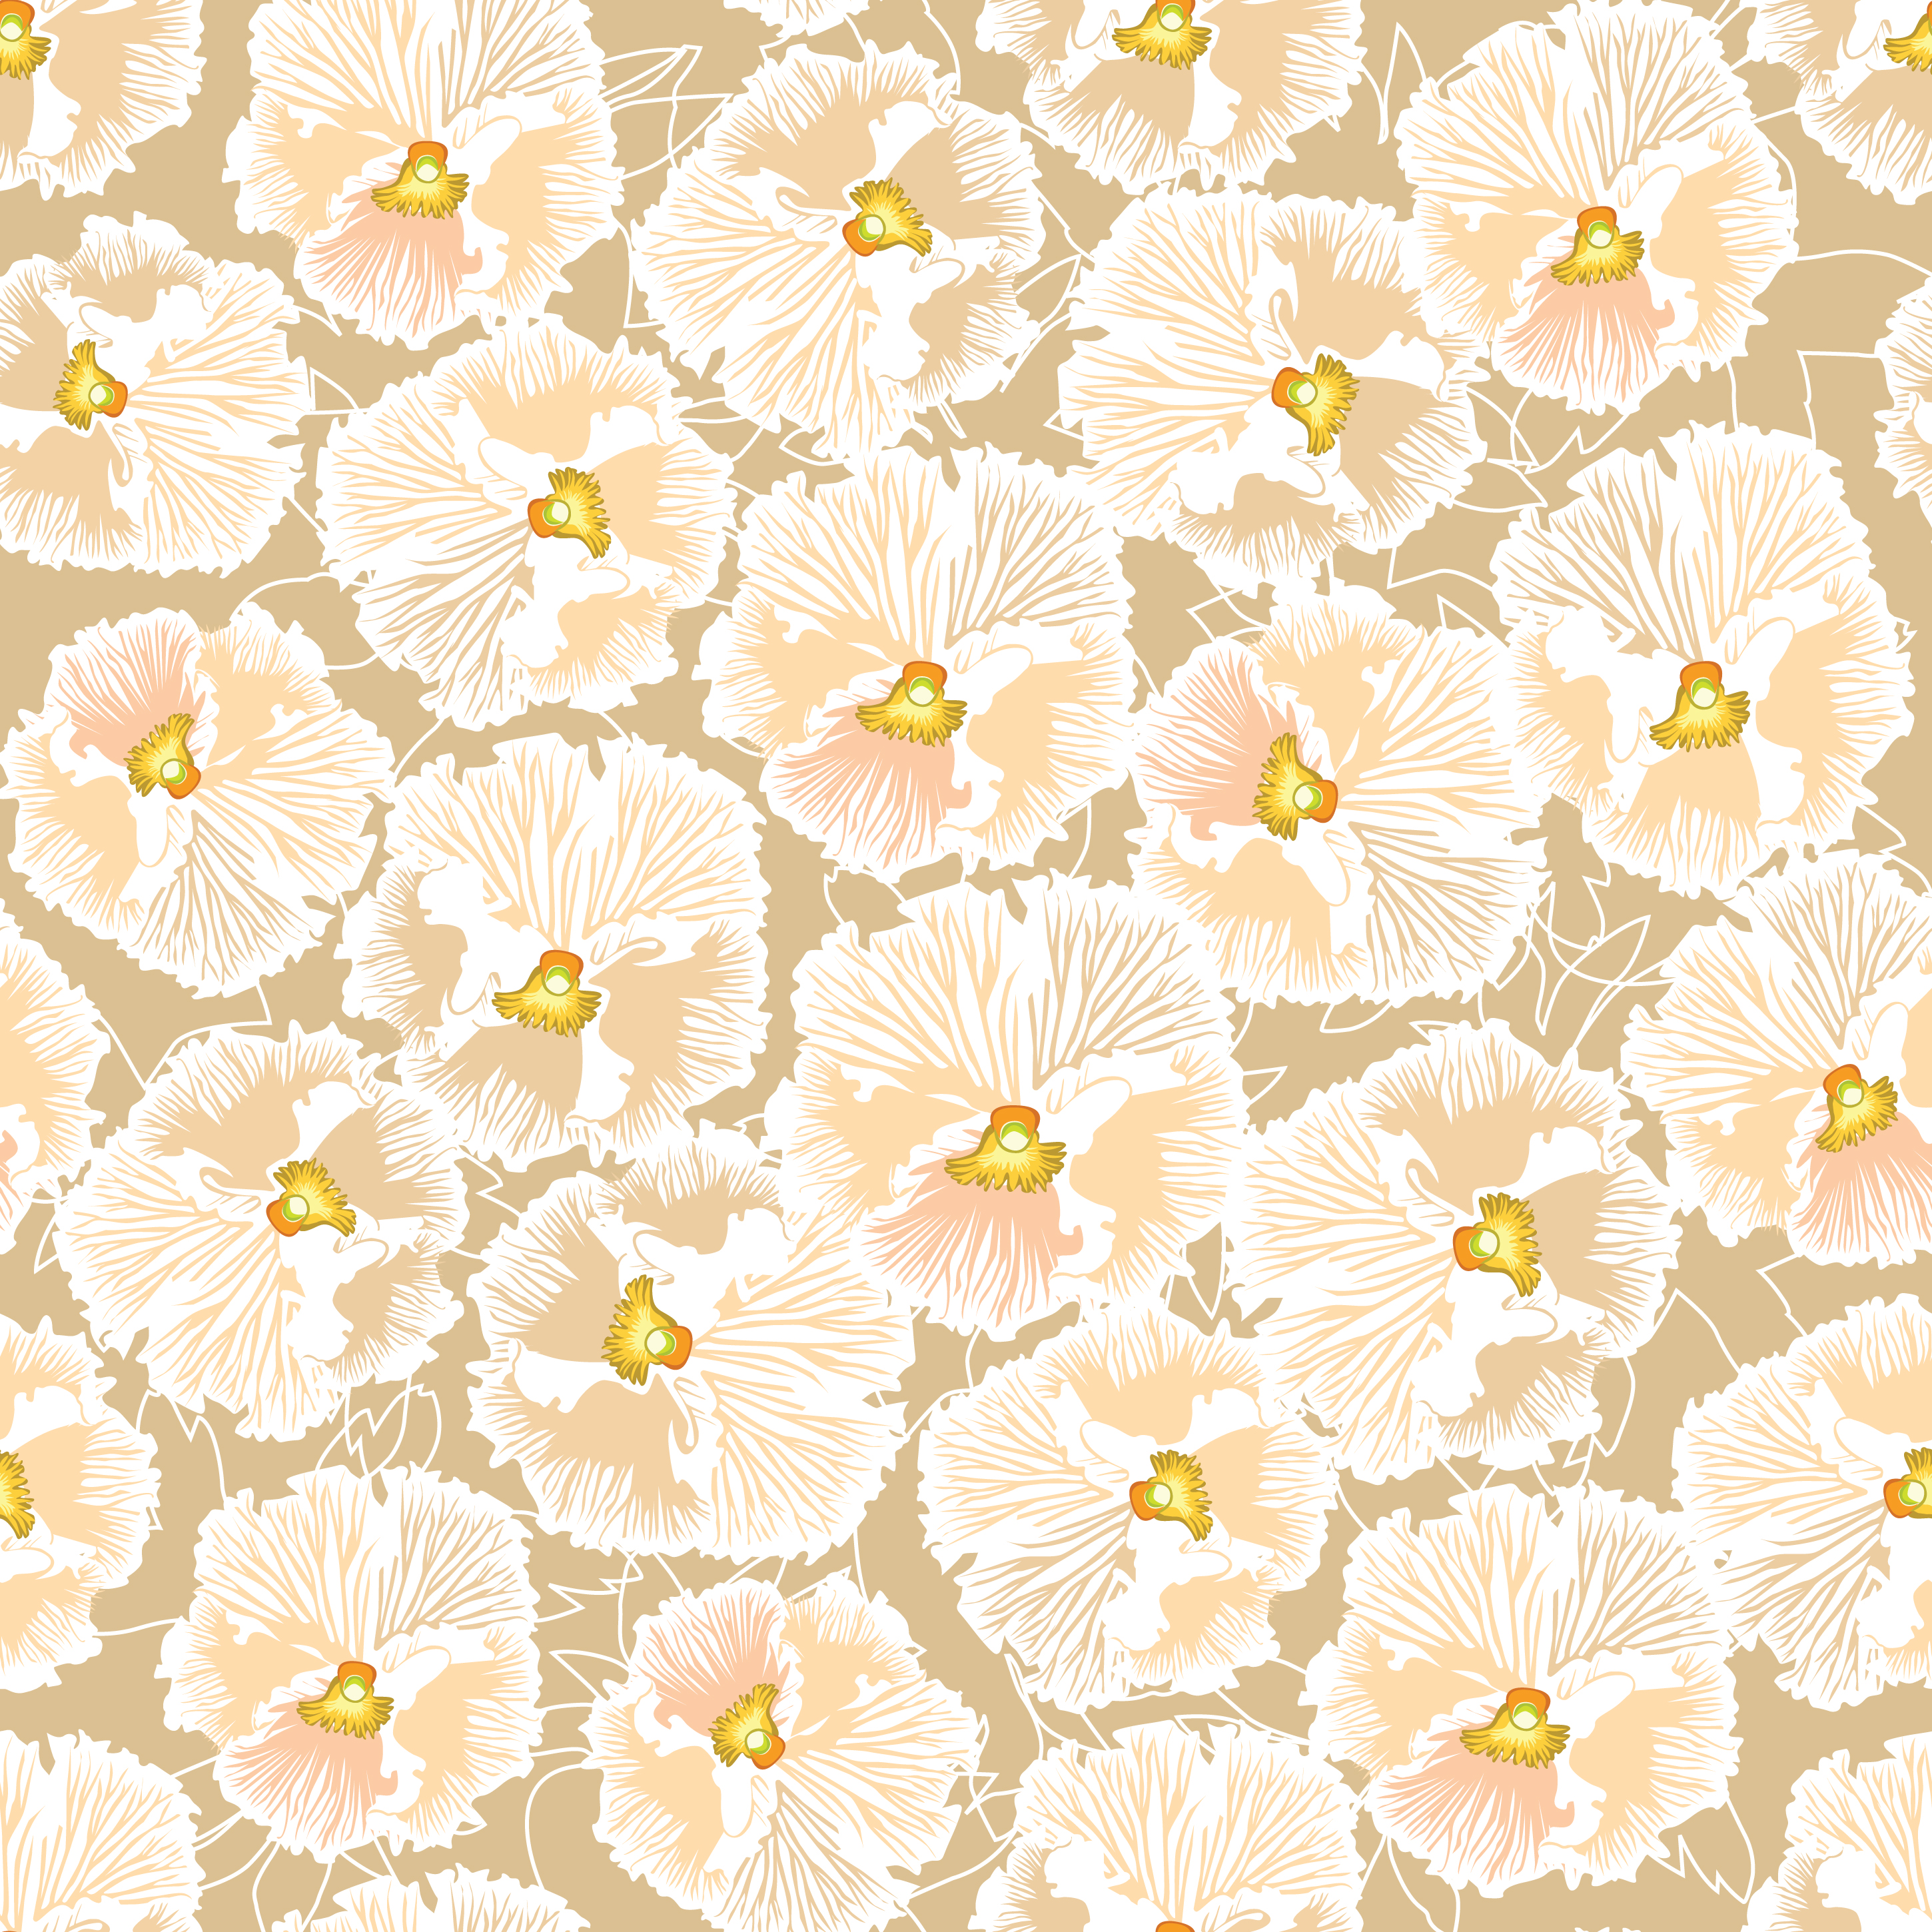 Download Floral seamless pattern. Flower background. Bloom garden texture 511344 - Download Free Vectors ...